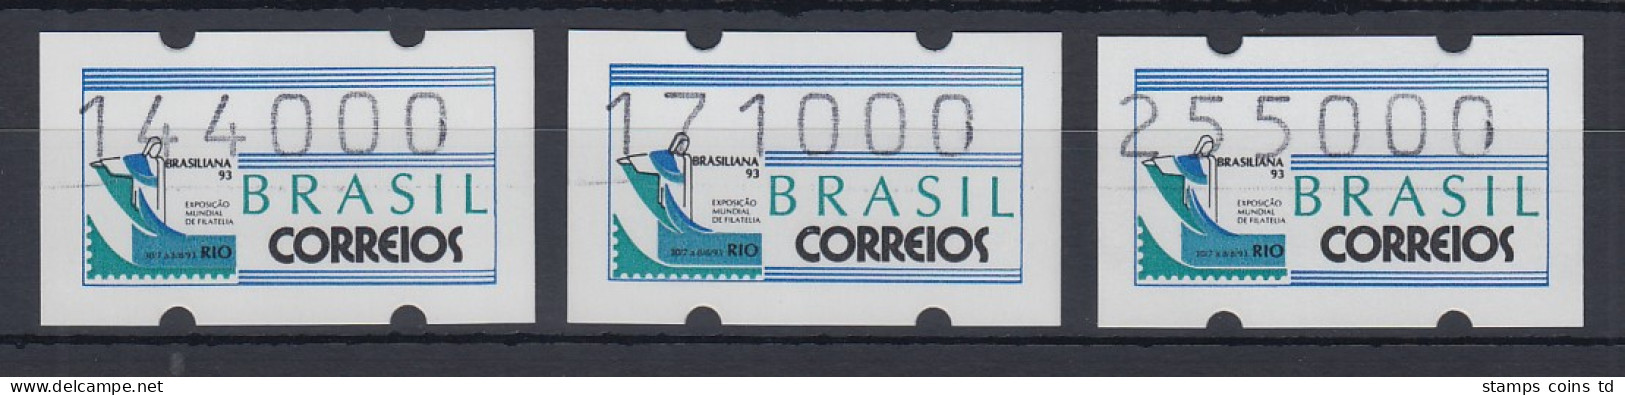 Brasilien Klüssendorf-ATM 1993 BRASILIANA Mi-Nr 5 Satz 144000-171000-255000 ** - Franking Labels